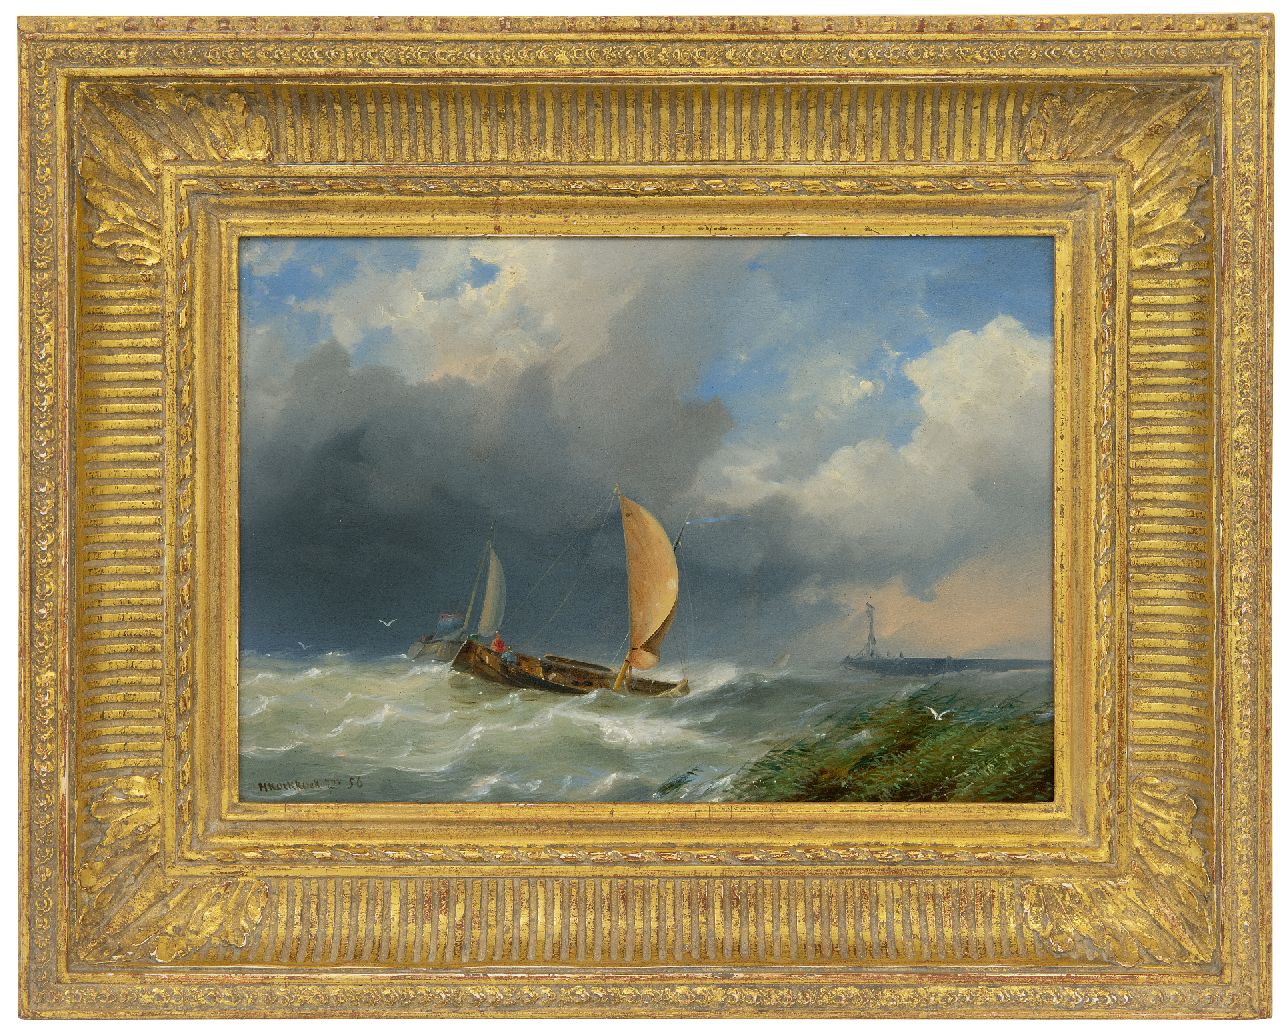 Koekkoek jr. H.  | Hermanus Koekkoek jr. | Paintings offered for sale | Ships in a storm near a harbor entrance, oil on panel 21.1 x 30.3 cm, signed l.l. and dated '56